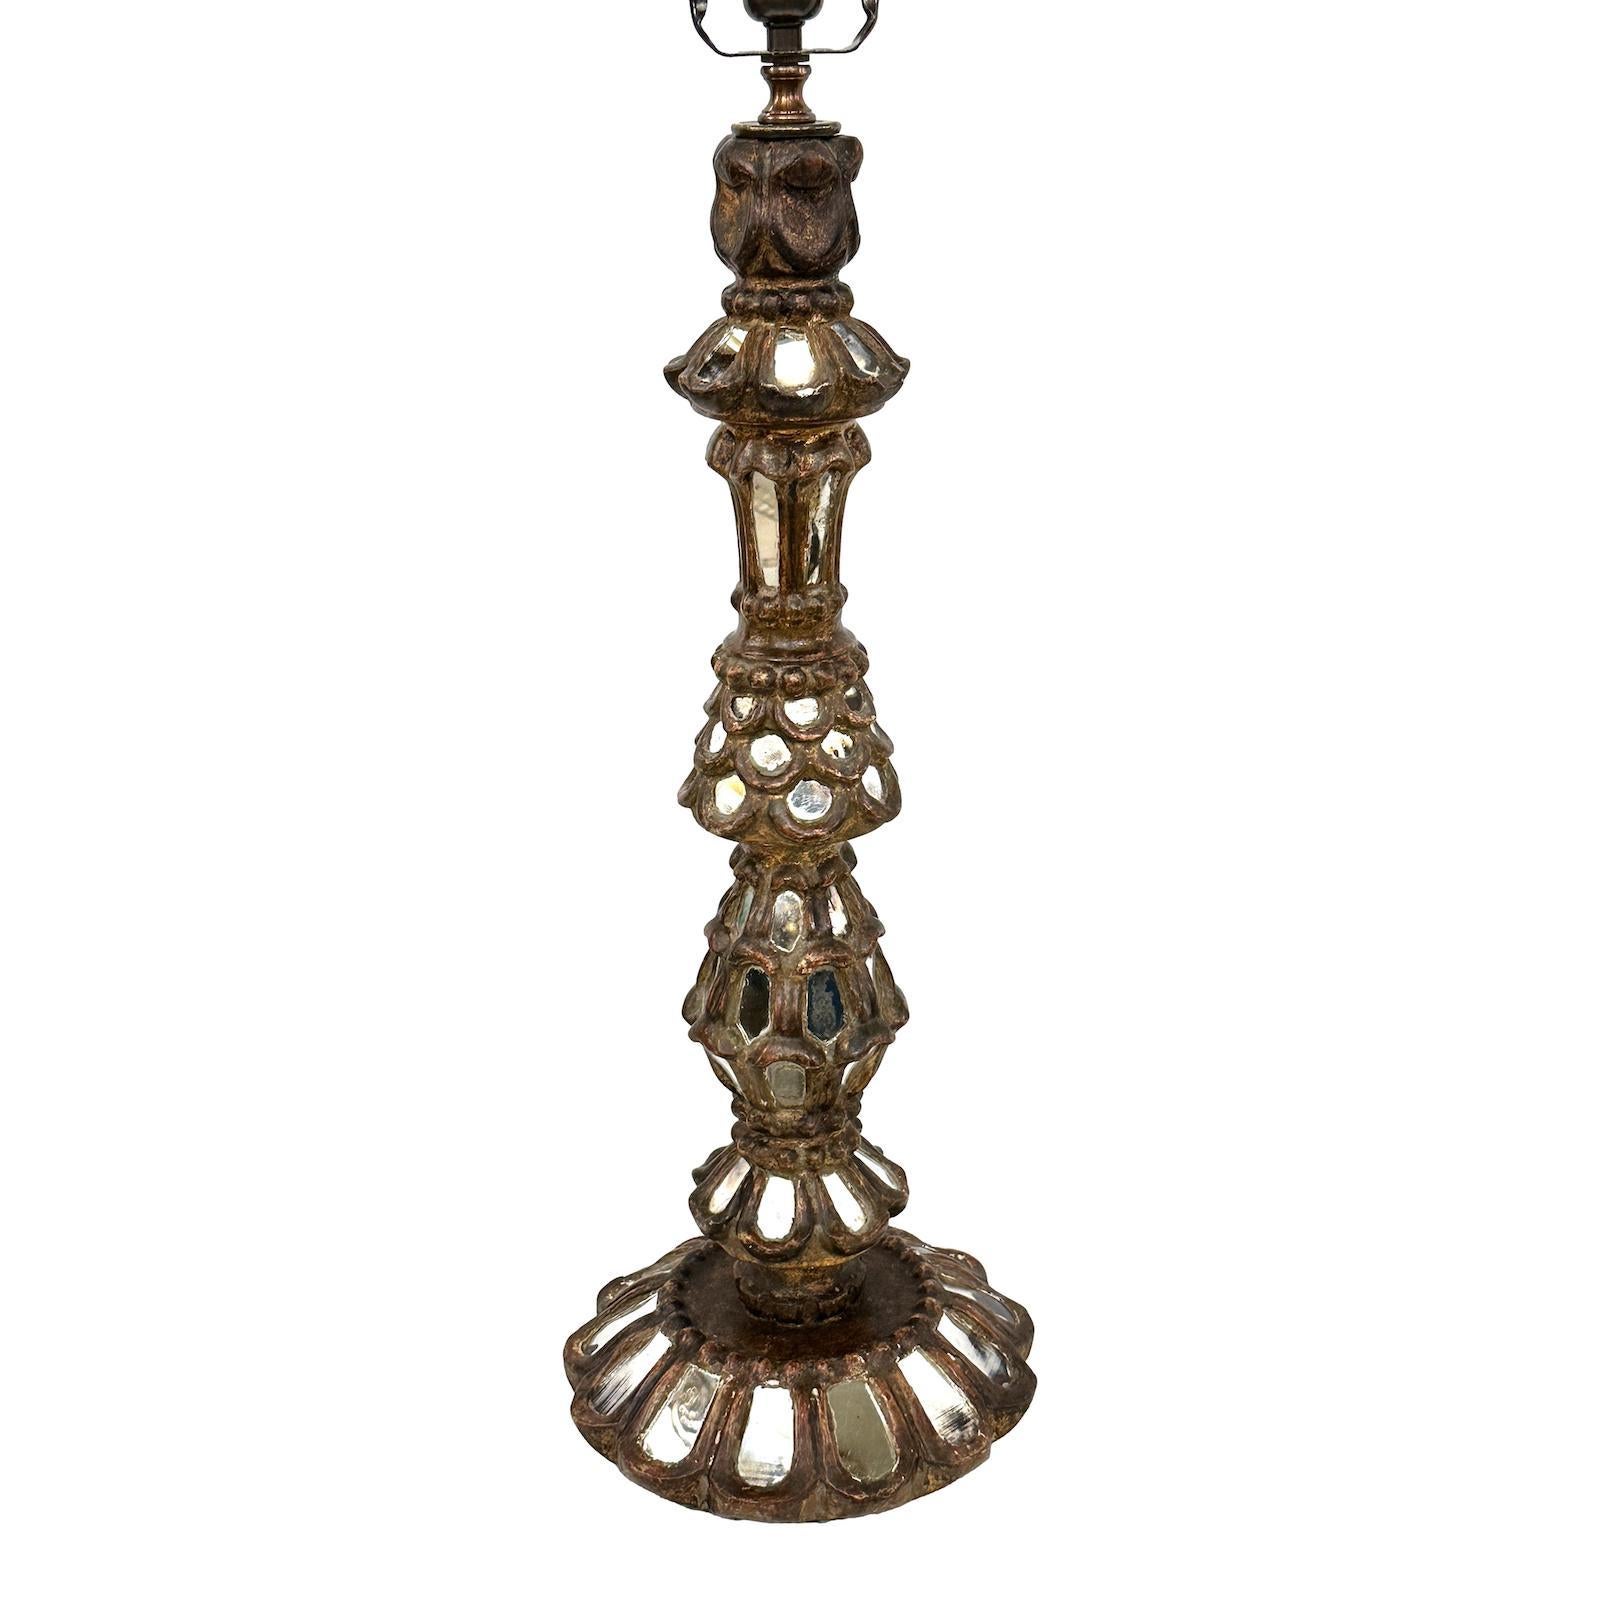 Spanish Antique Candlesitck Lamp For Sale